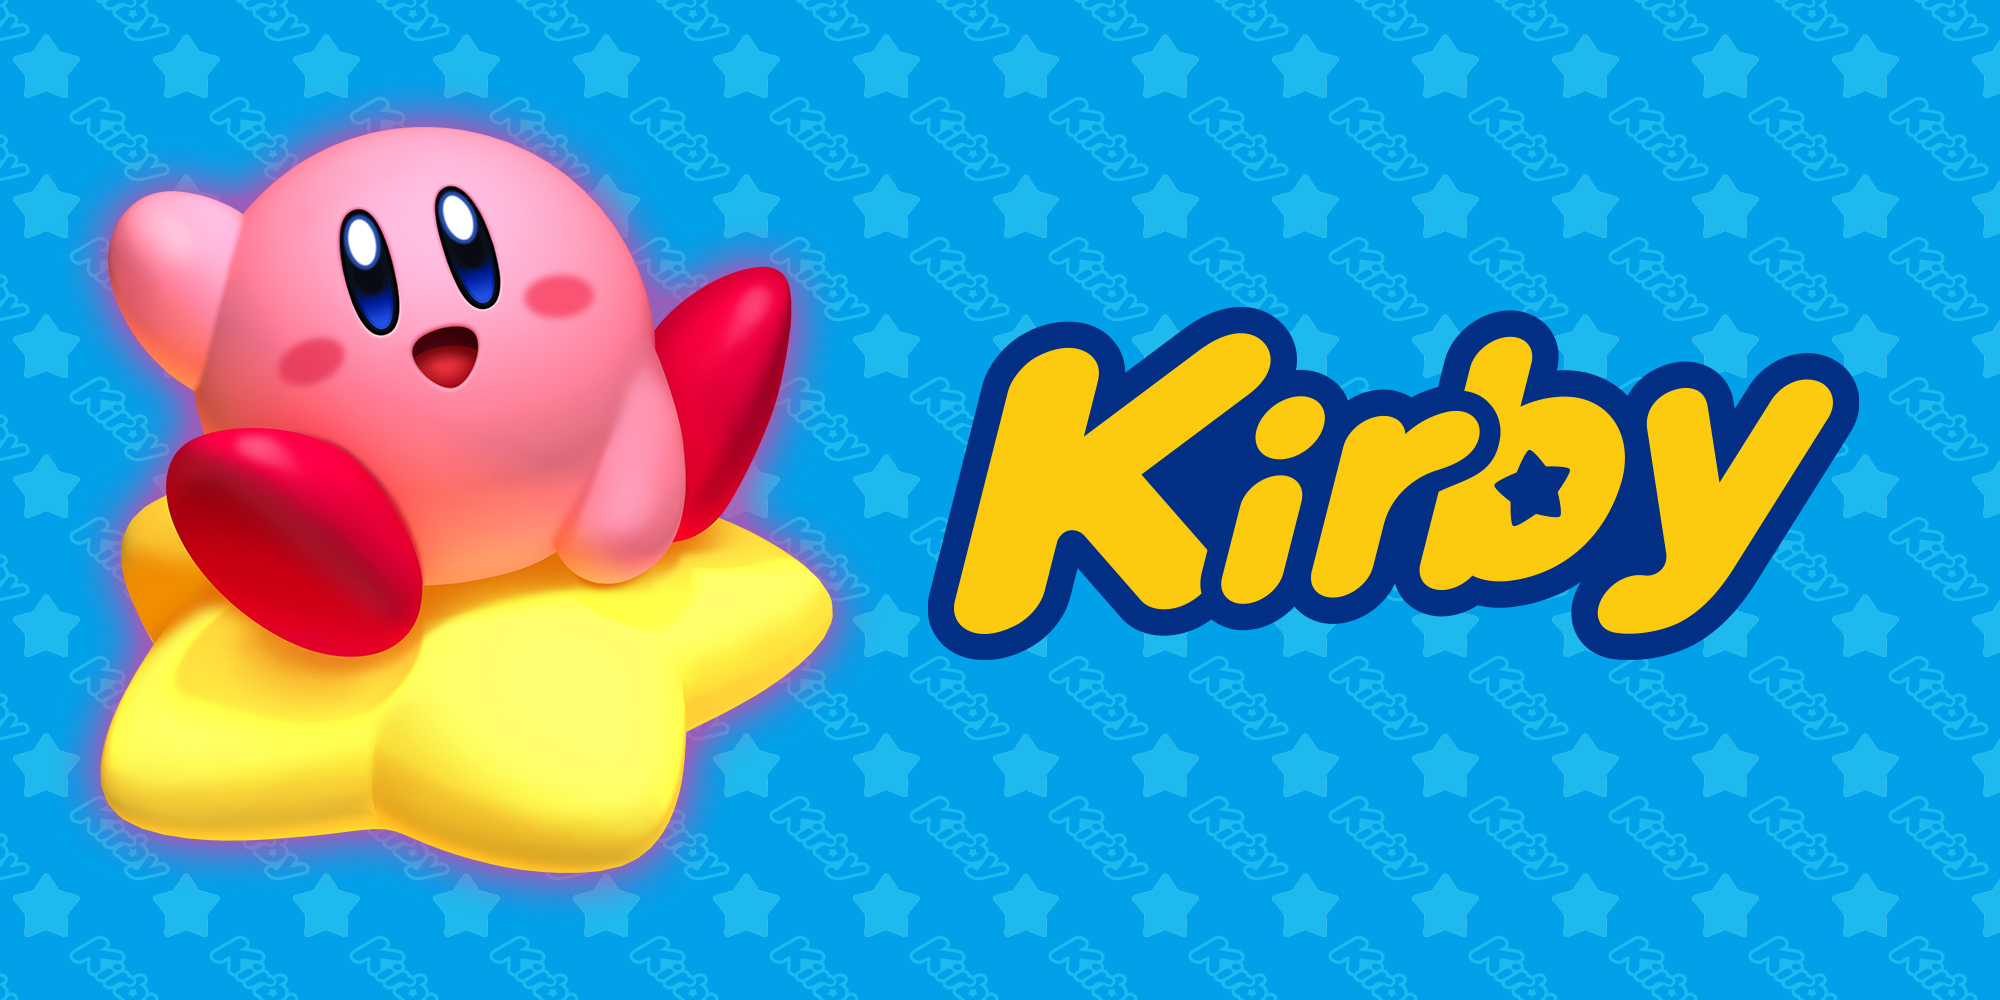 Portail Kirby | Jeux | Nintendo